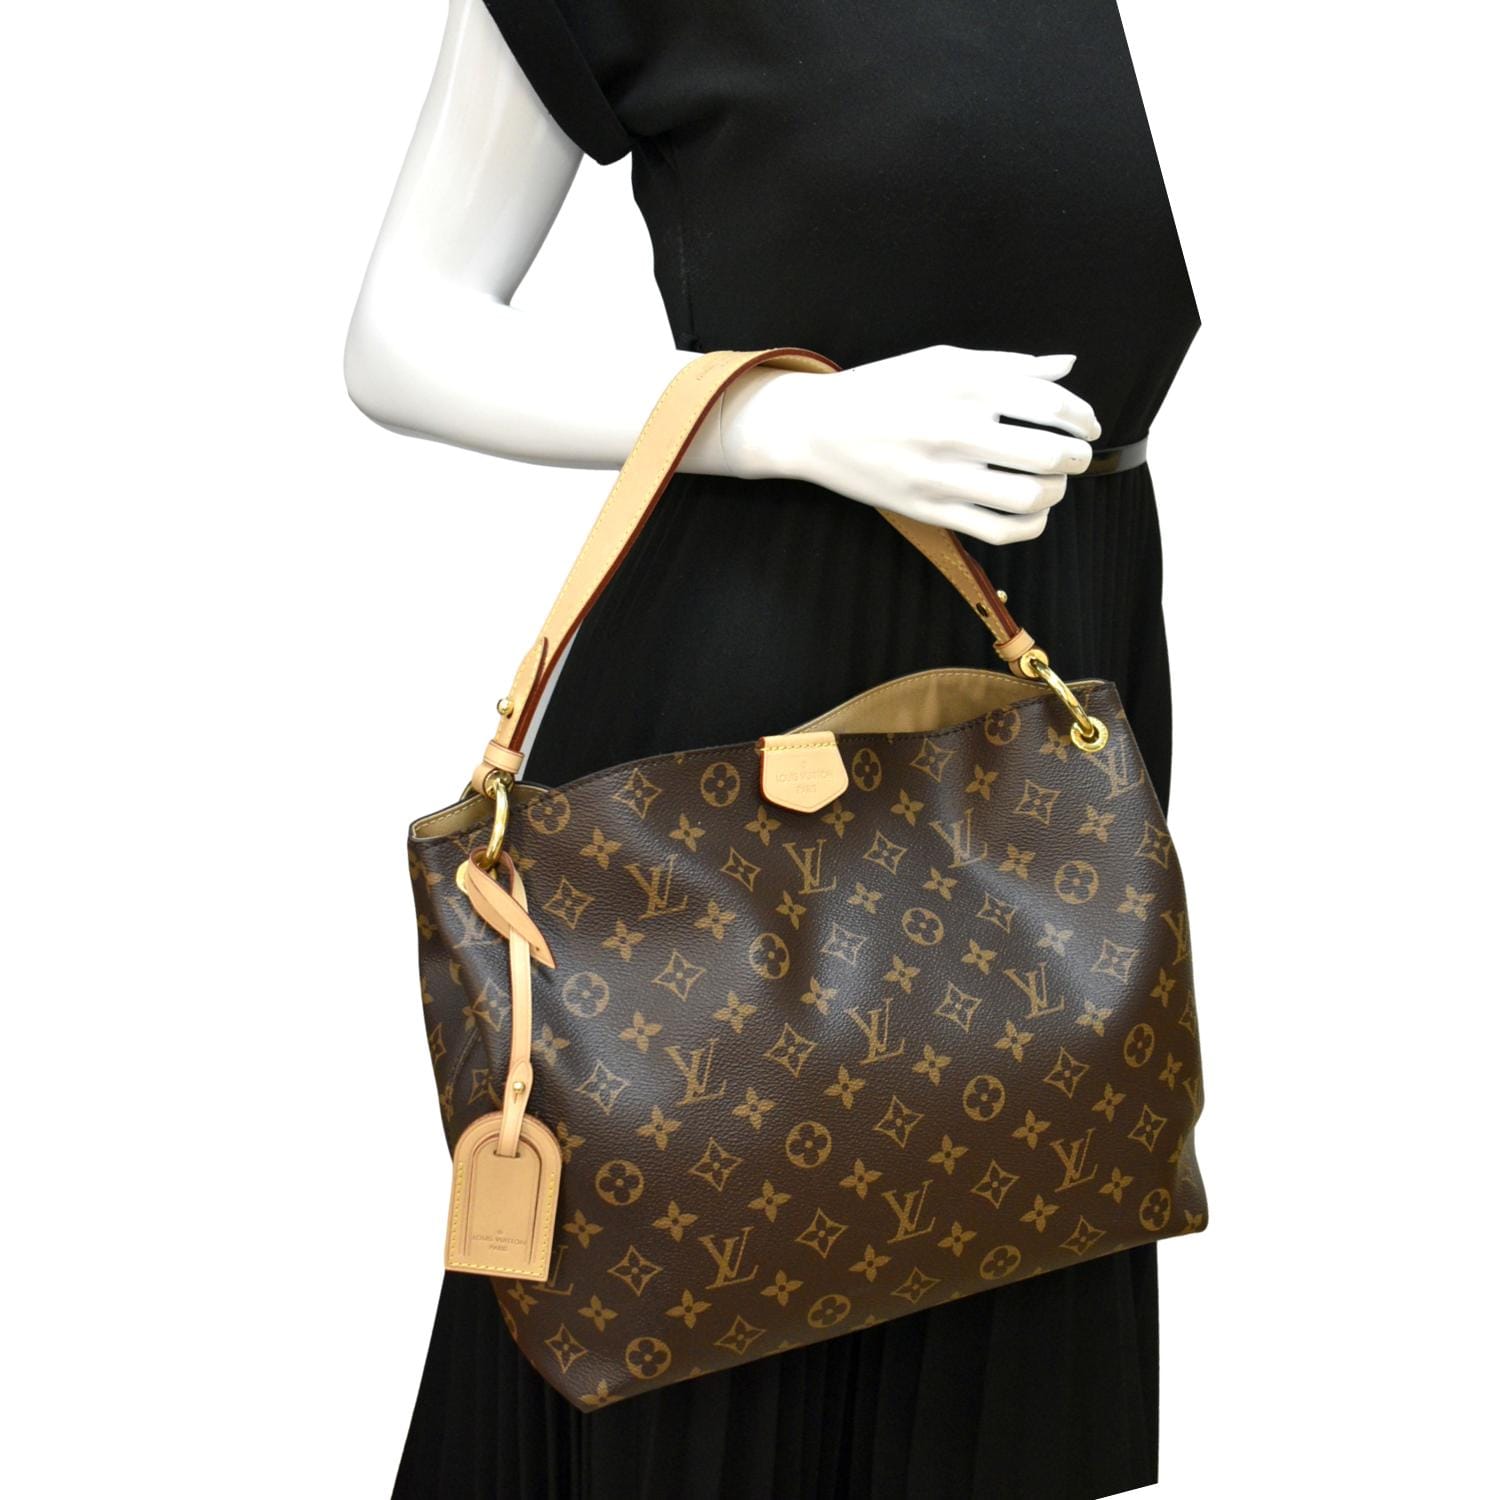 Graceful PM Monogram - Women - Handbags